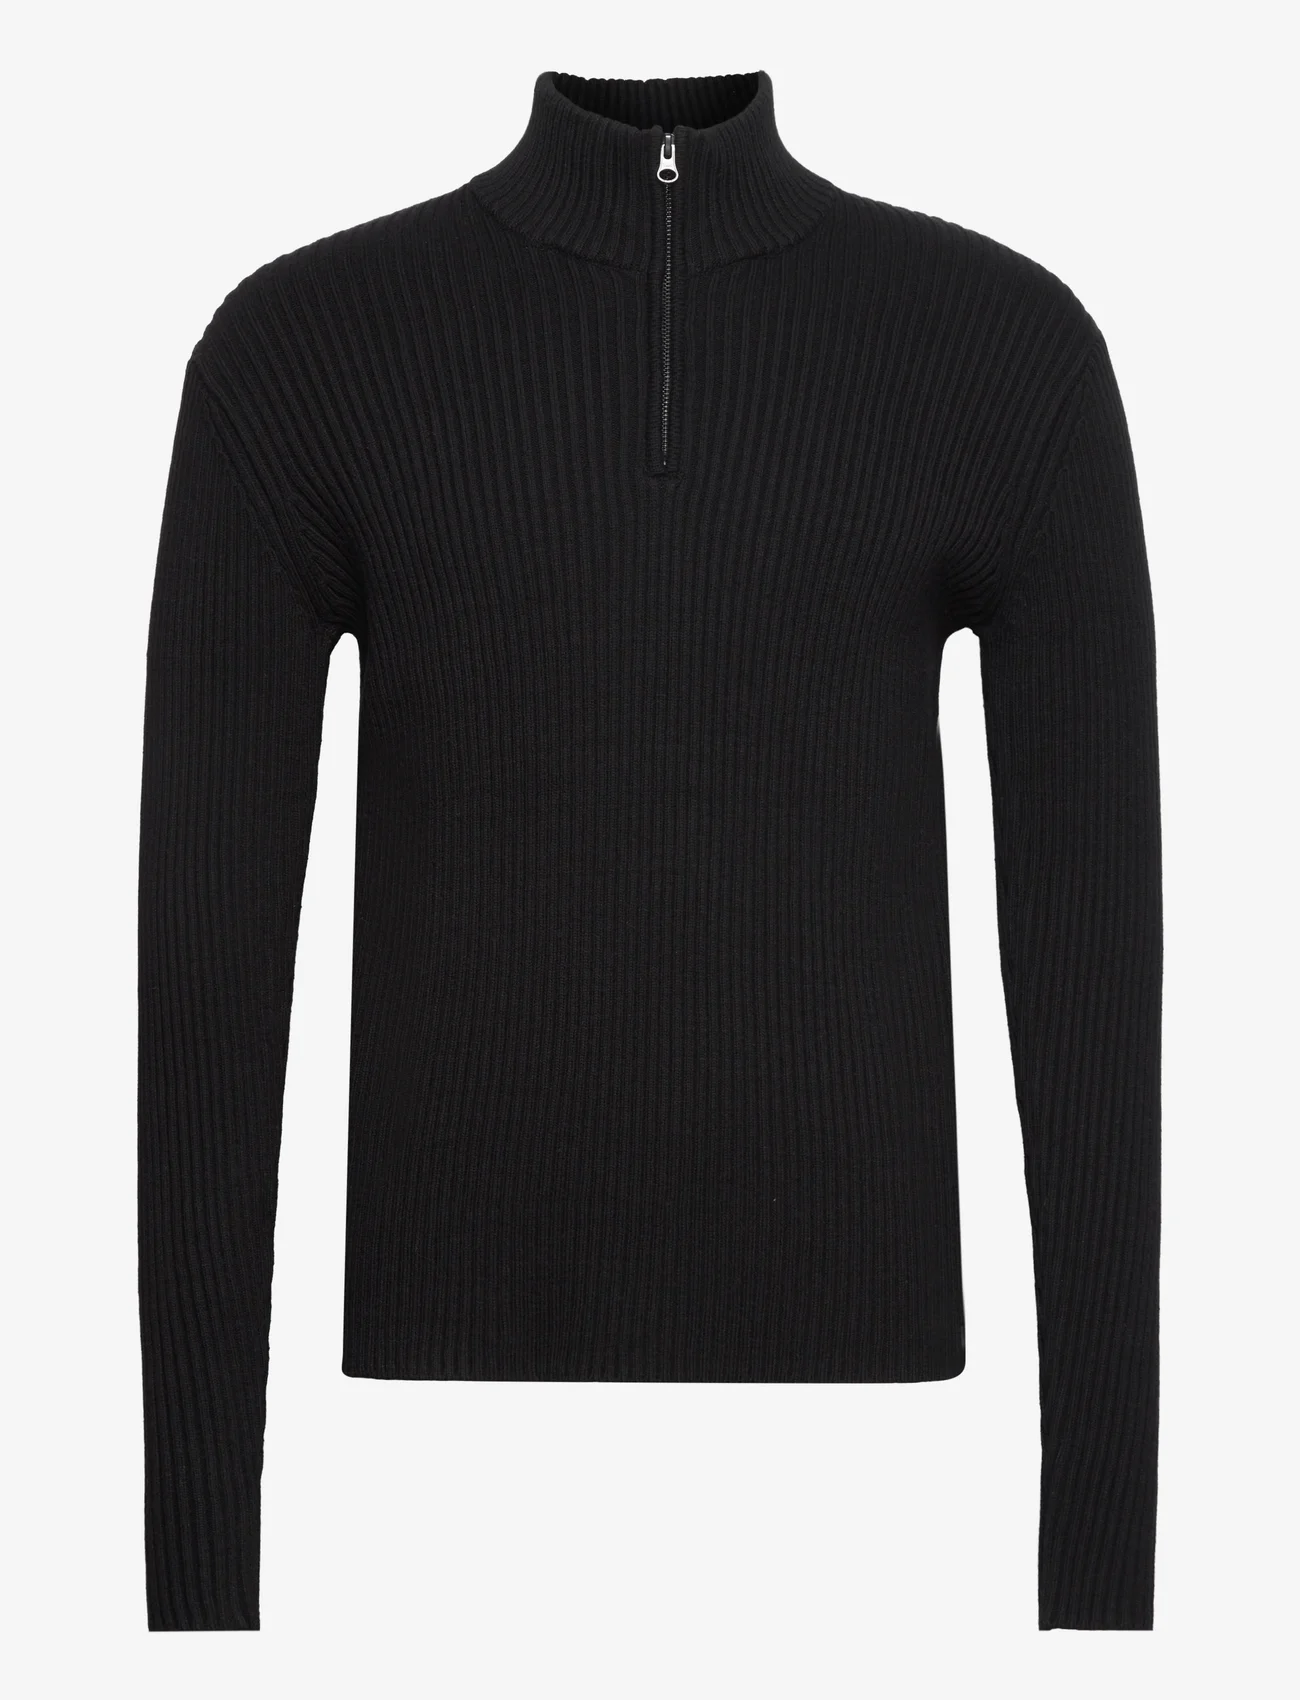 Bruuns Bazaar - SimBBBilly zip knit - menn - black - 0